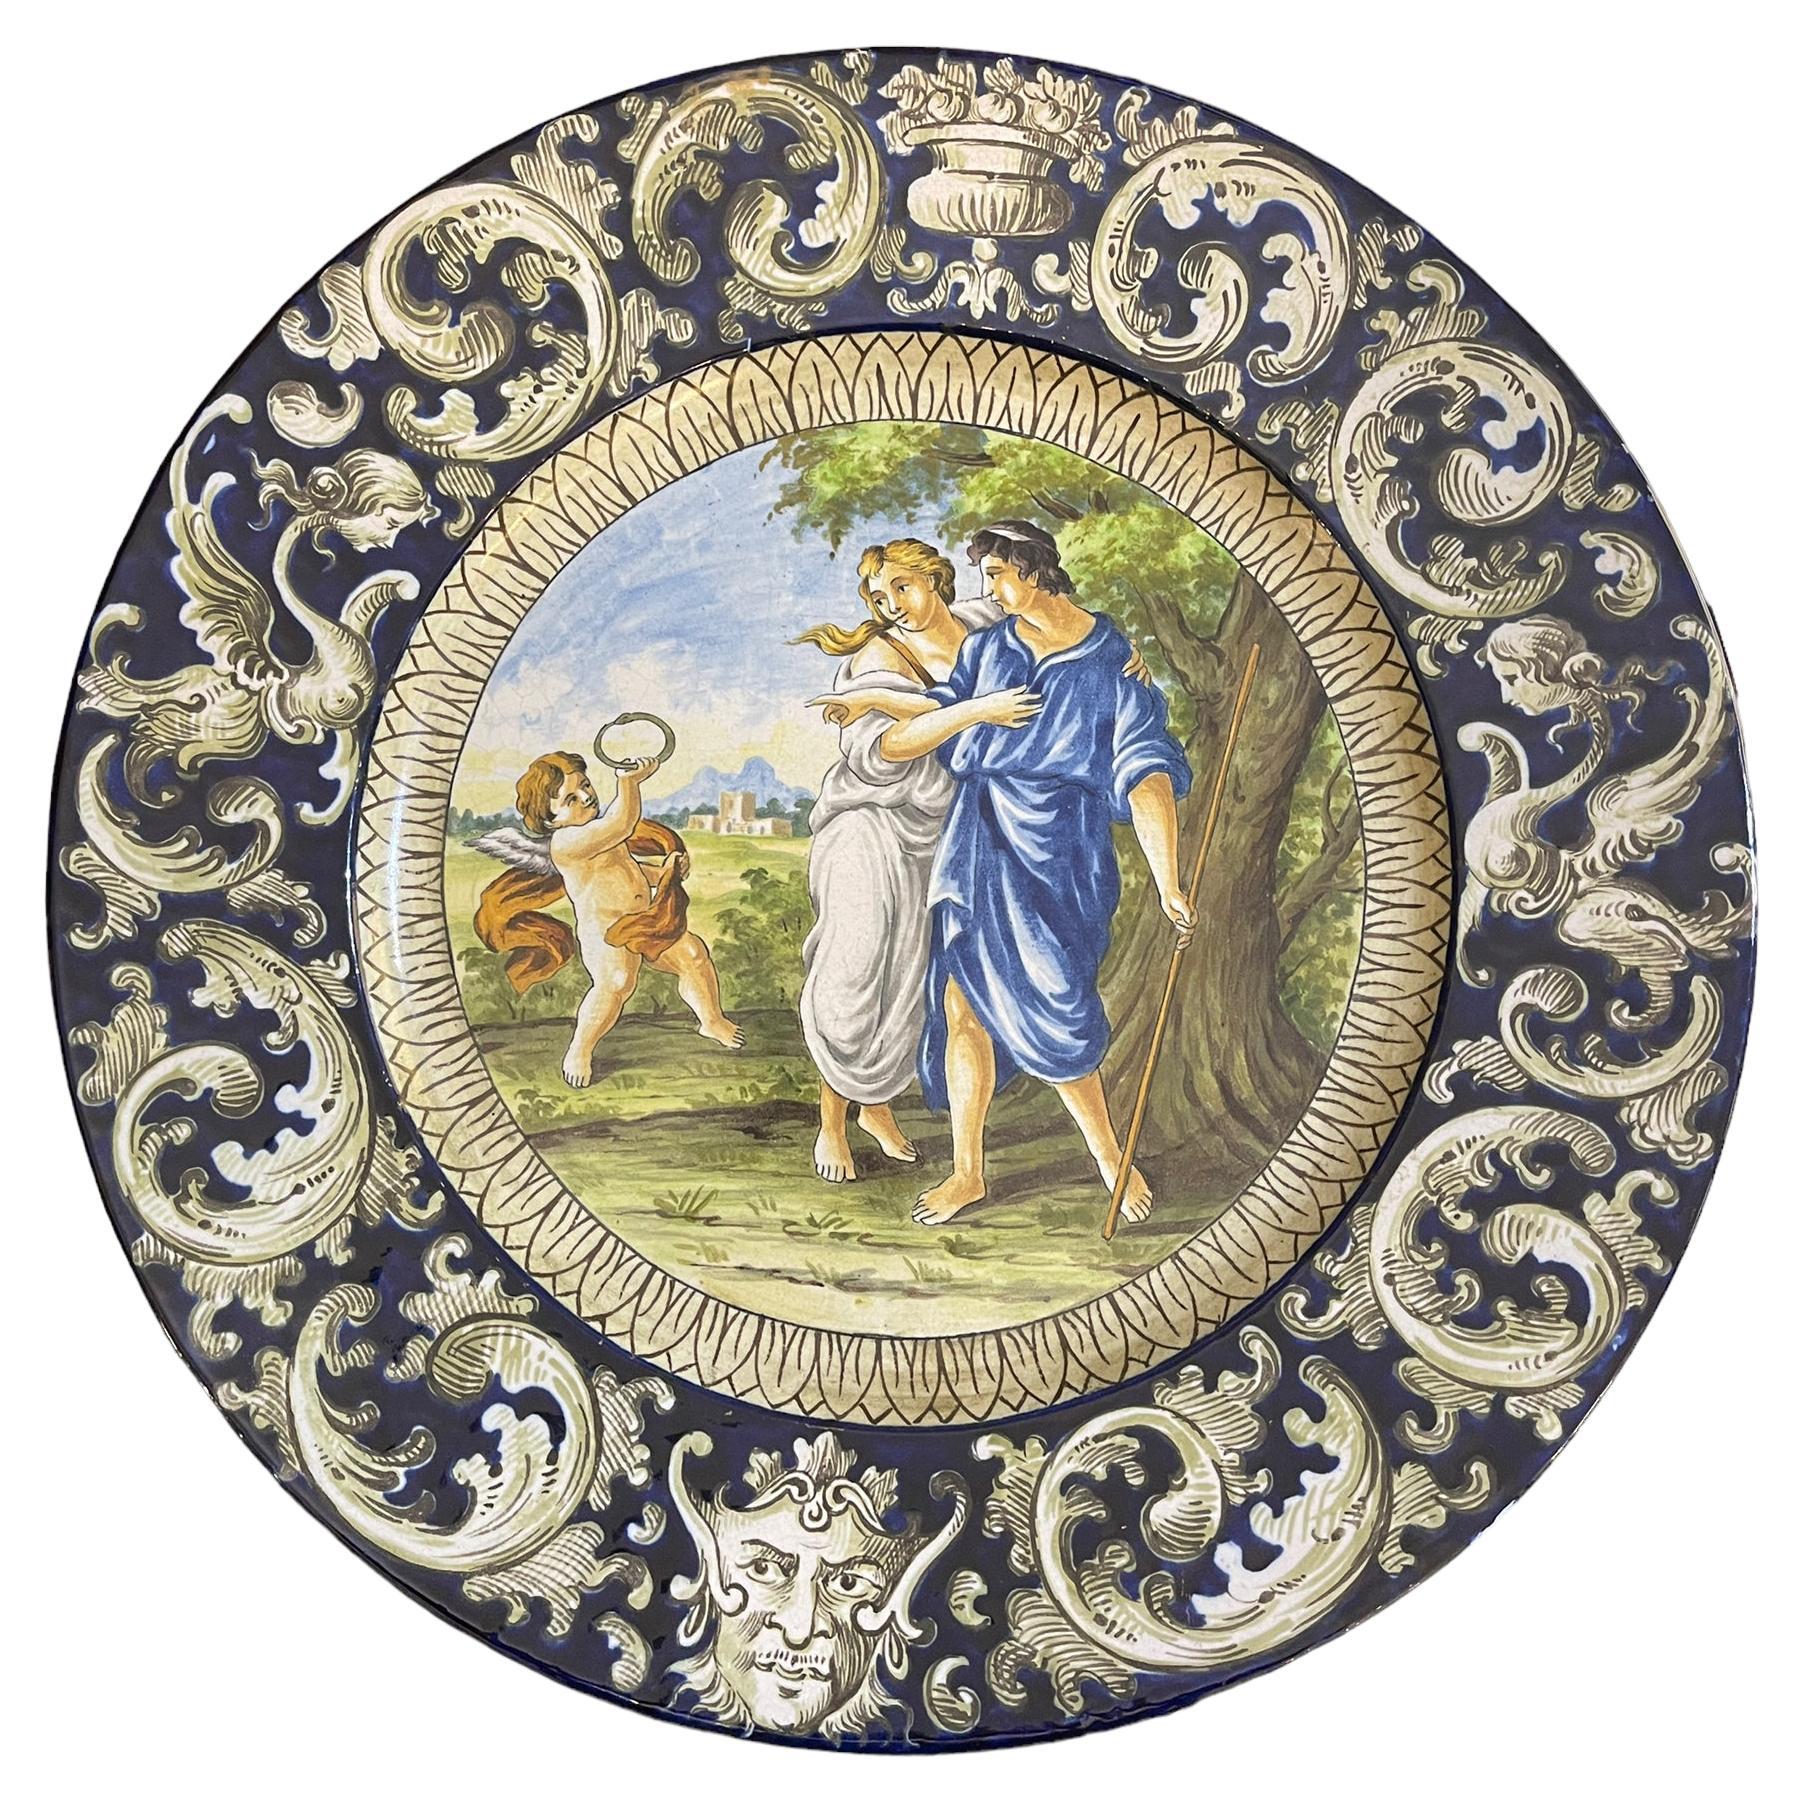 Decorated ceramic plate, 19th century, mythological scene